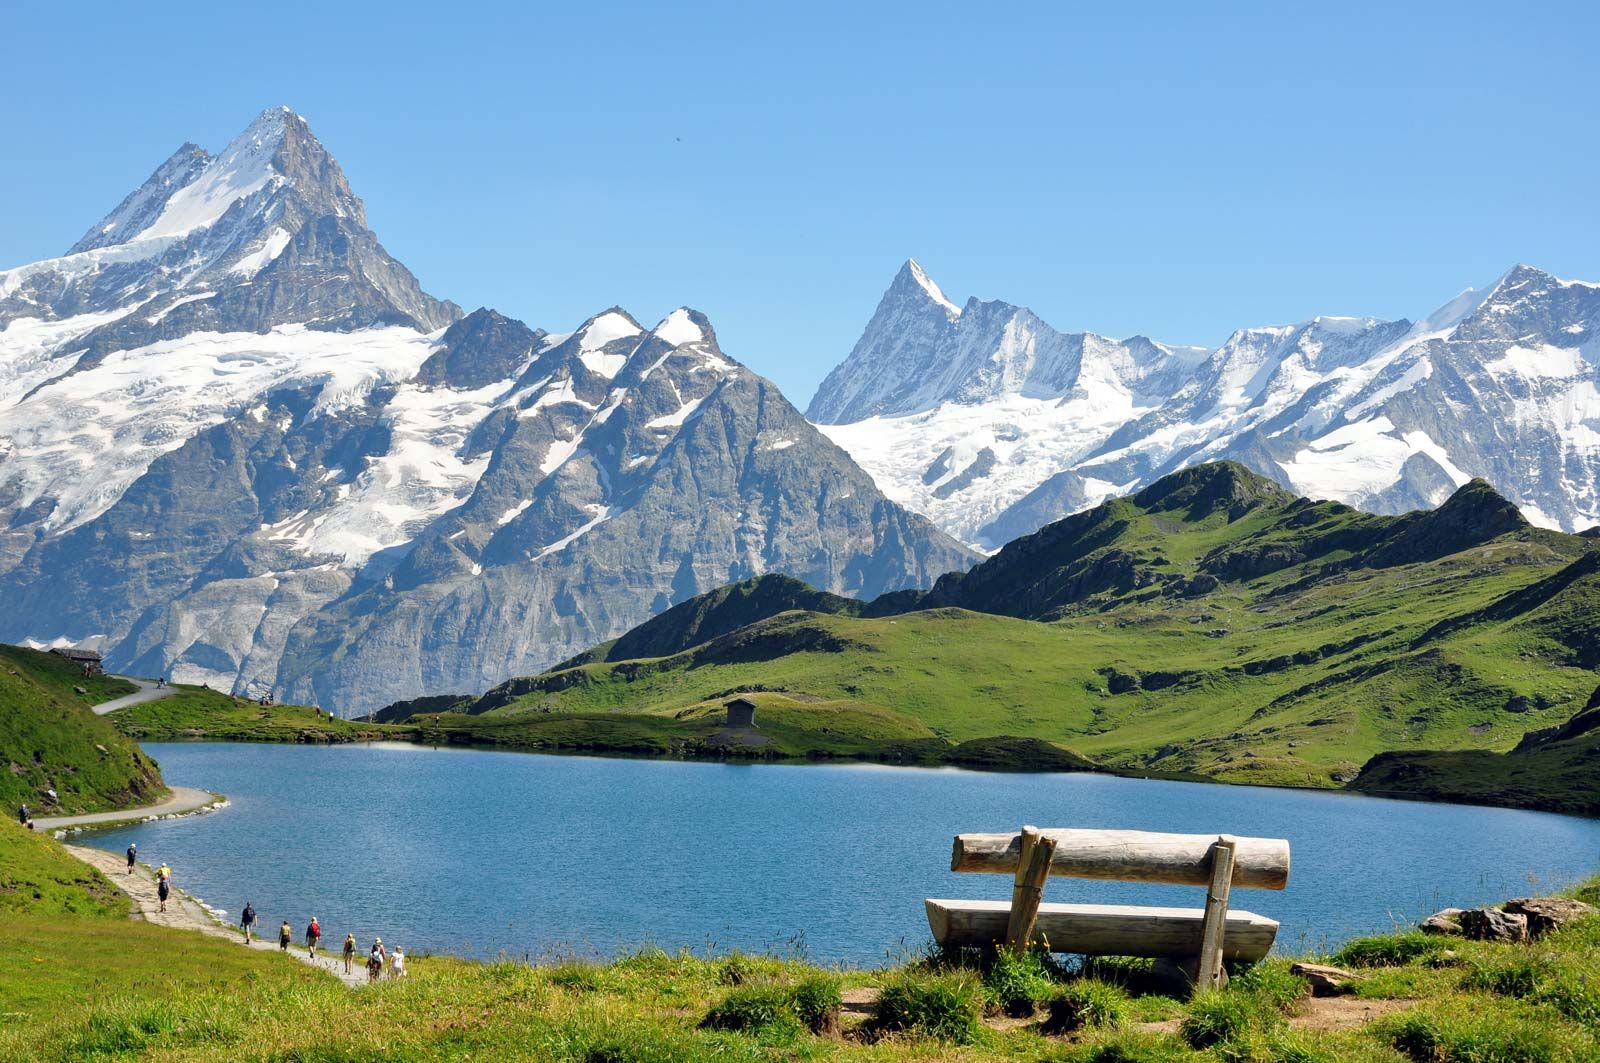 The Alps in Switzerland